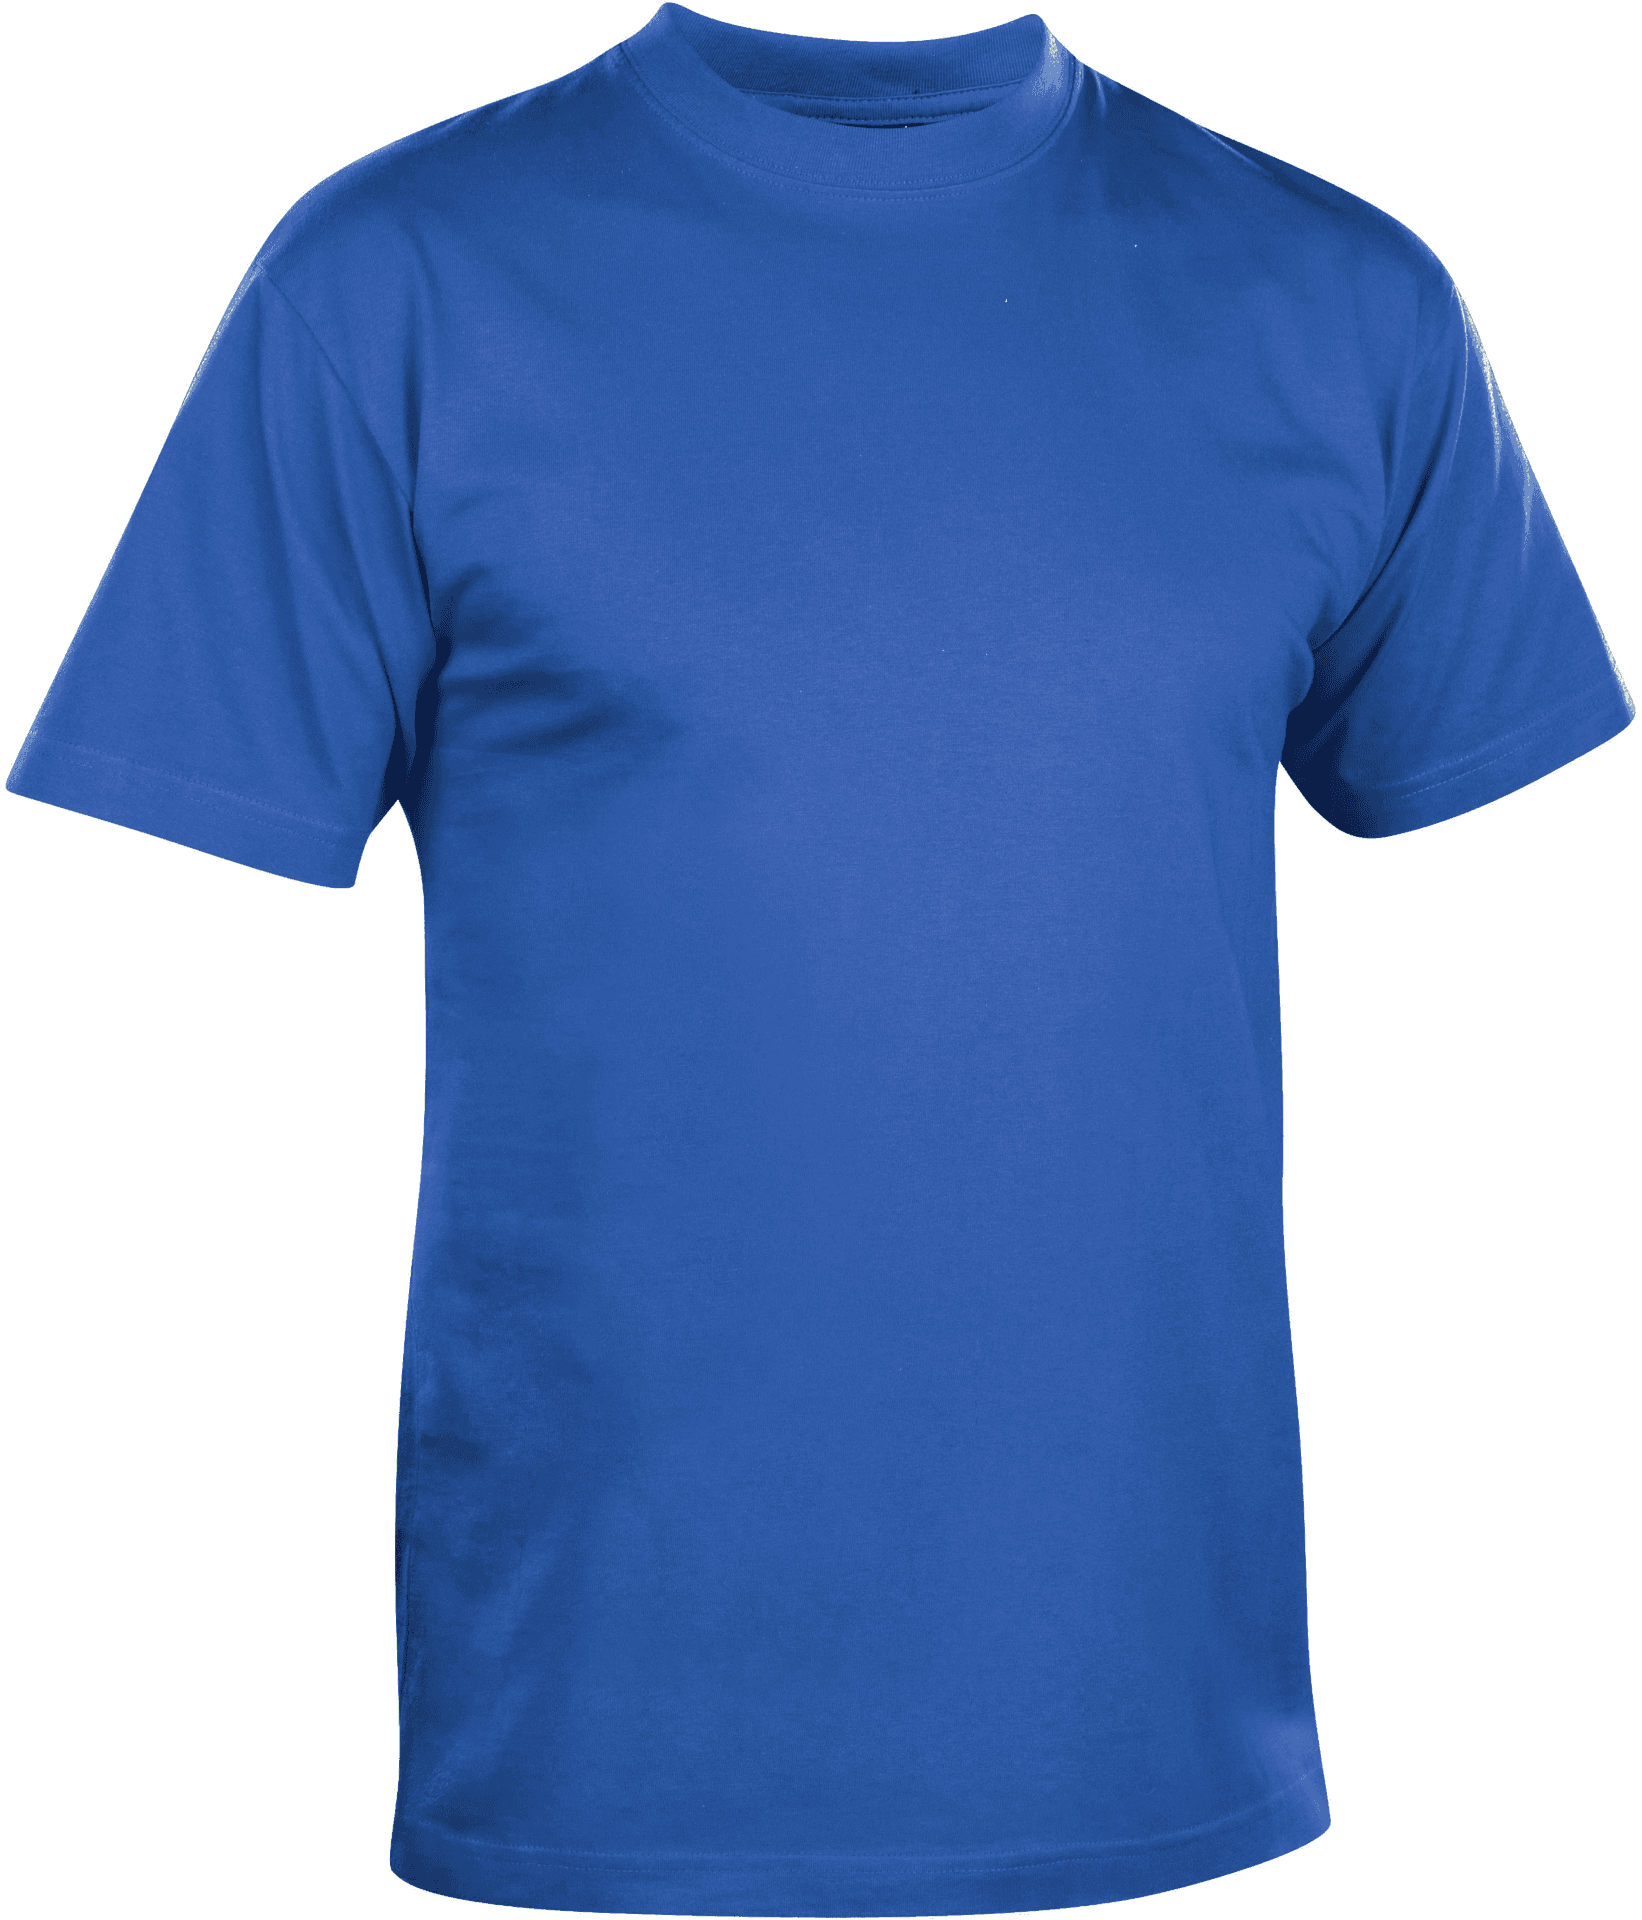 Blue Crew Neck T Shirt PNG image